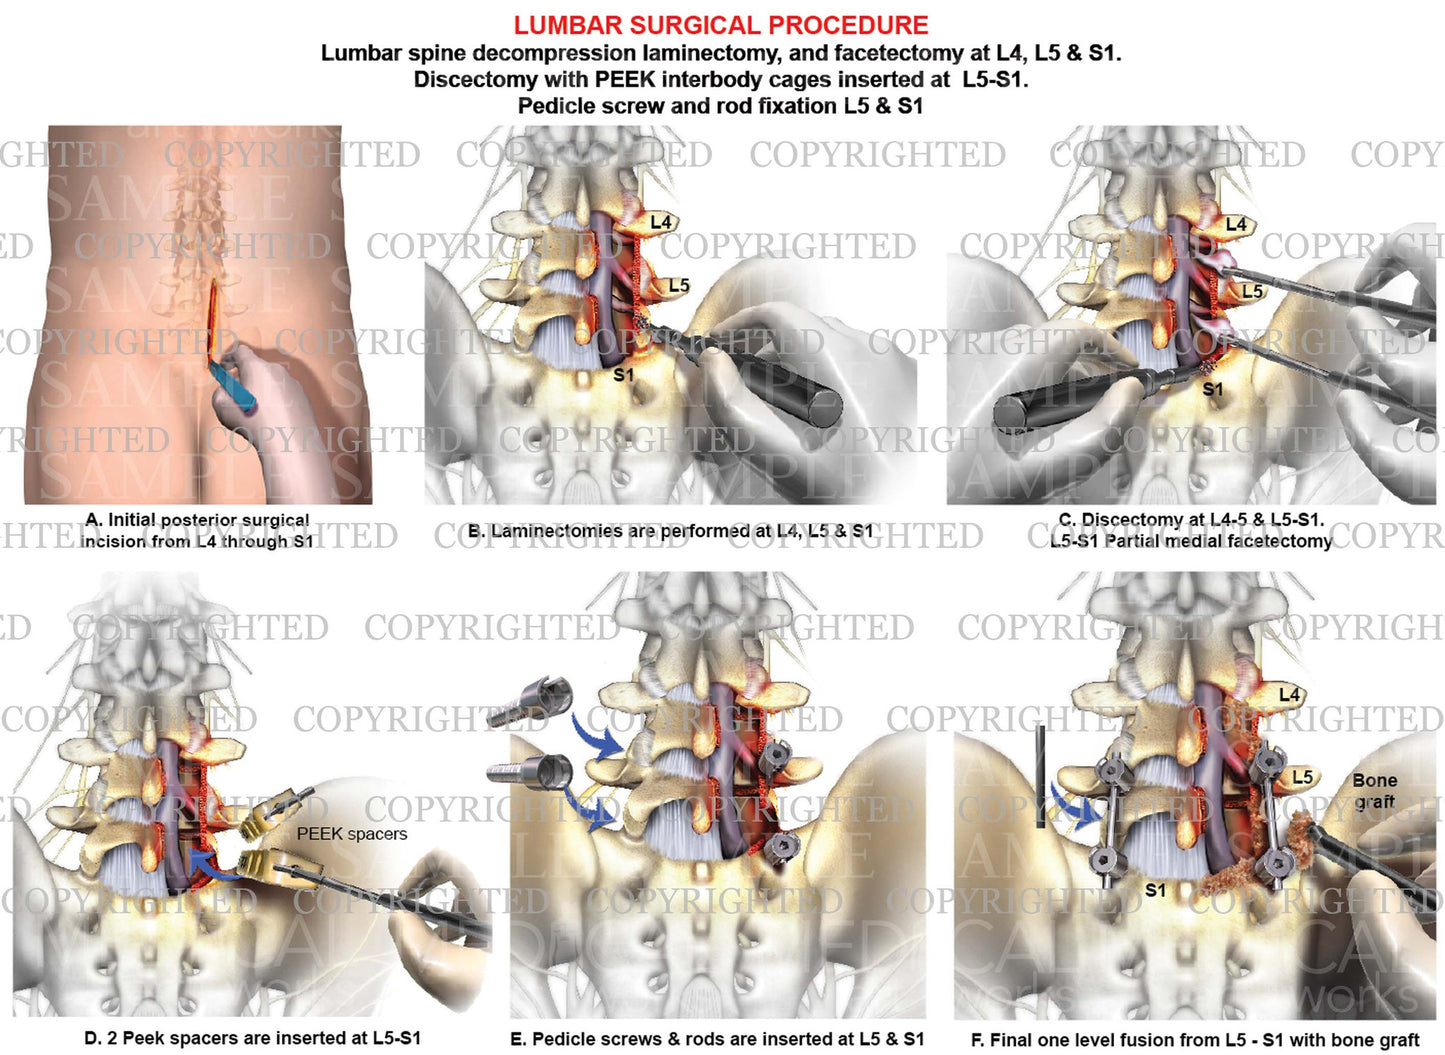 Lumbar interbody fusion surgical procedure